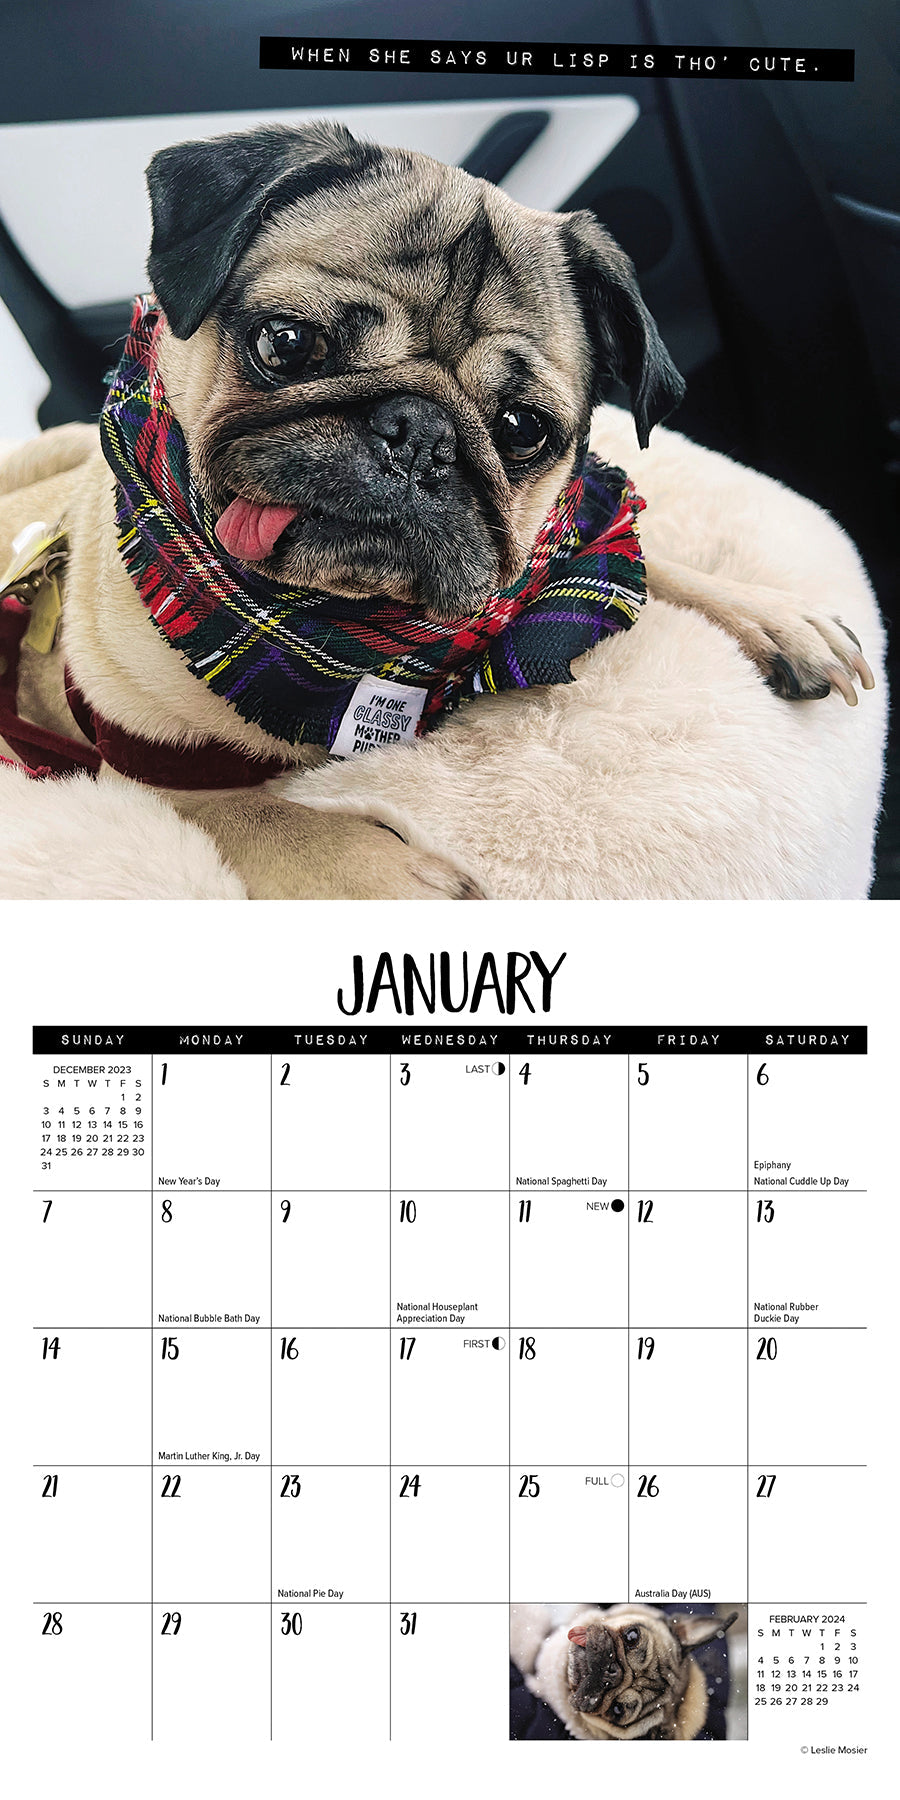 2024 Doug the Pug - Mini Wall Calendar